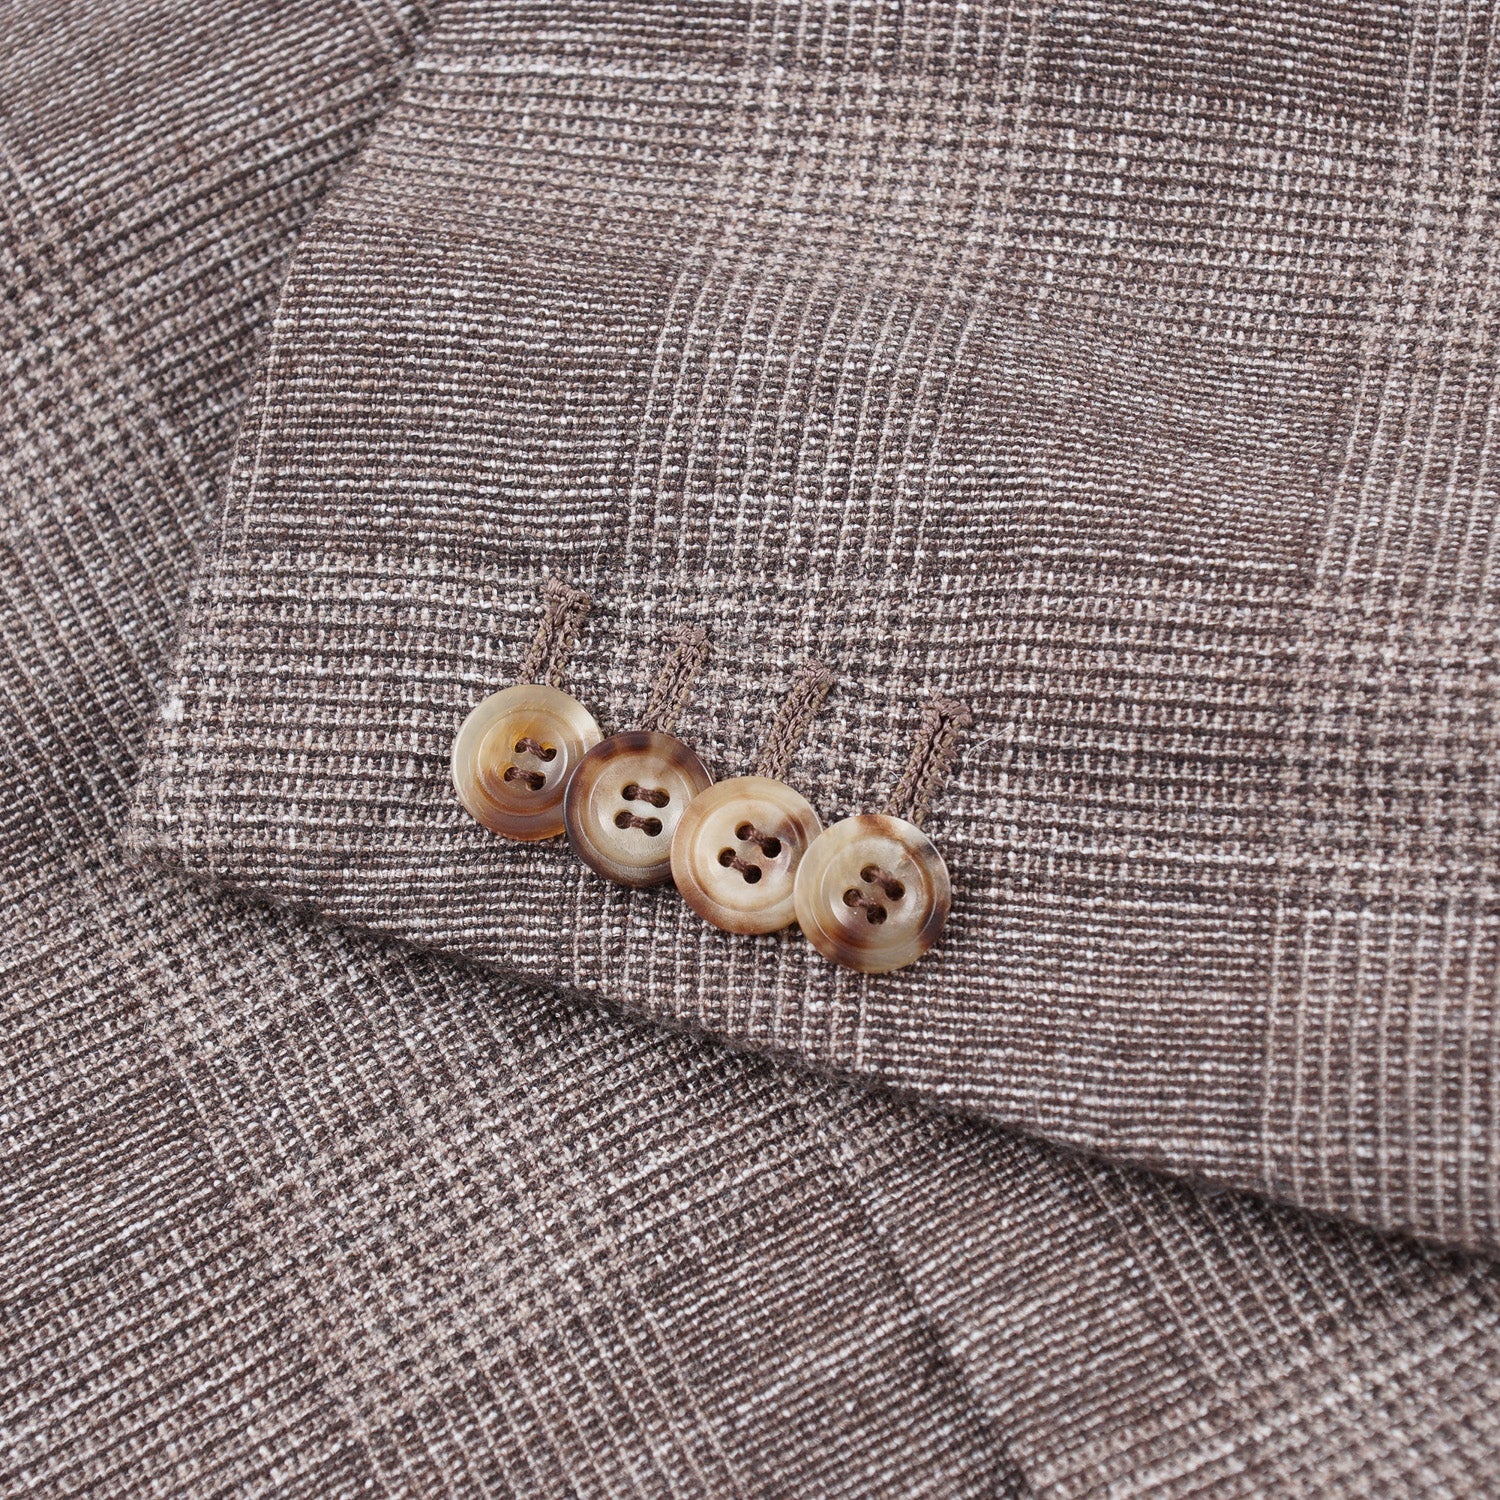 Kiton Cashmere-Blend Suit with Jogger Pants - Top Shelf Apparel